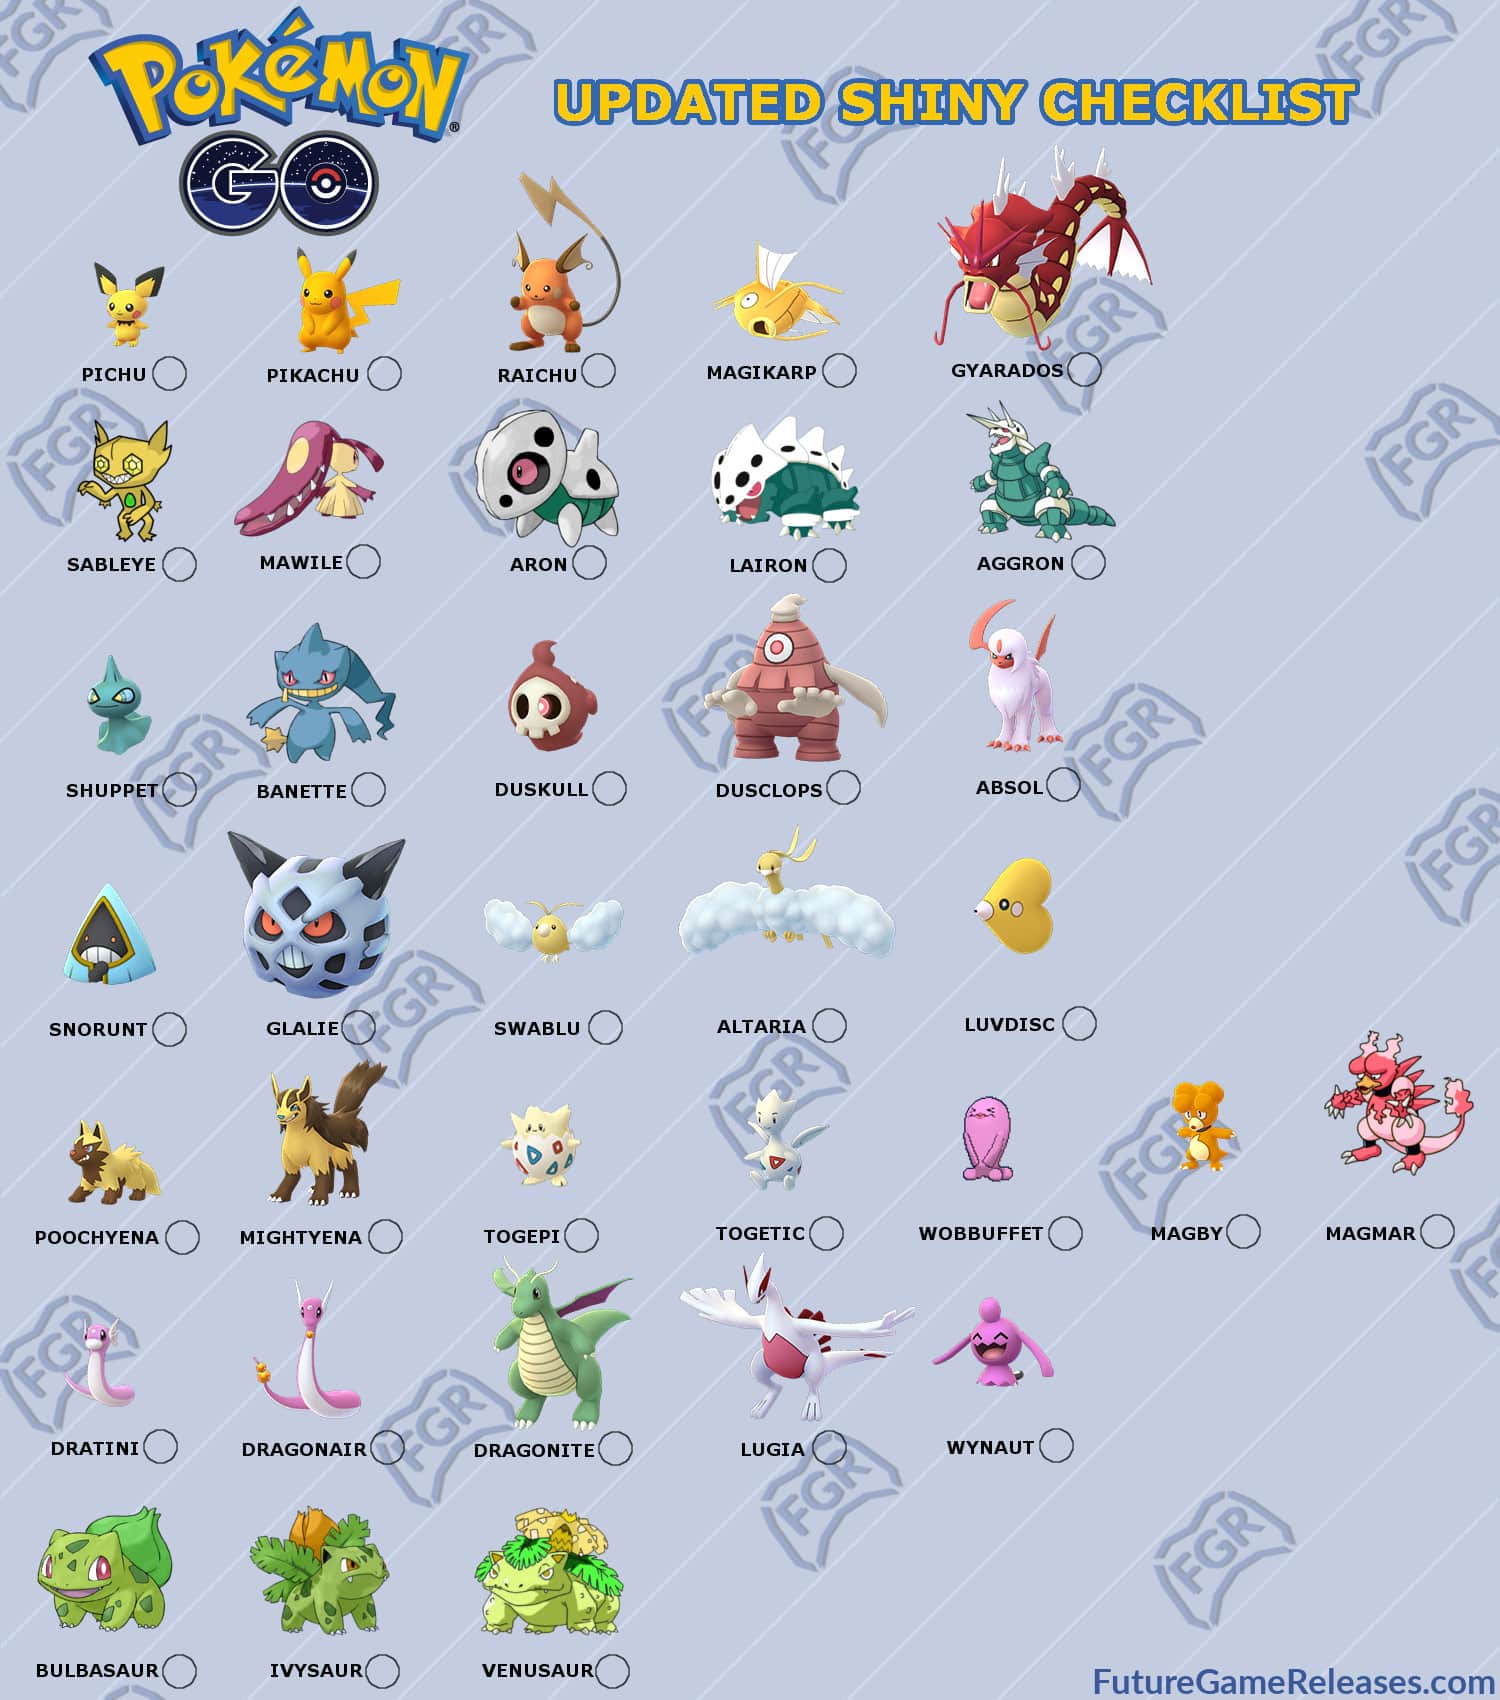 Pokemon Go Shiny List: full shiny checklist and how to catch